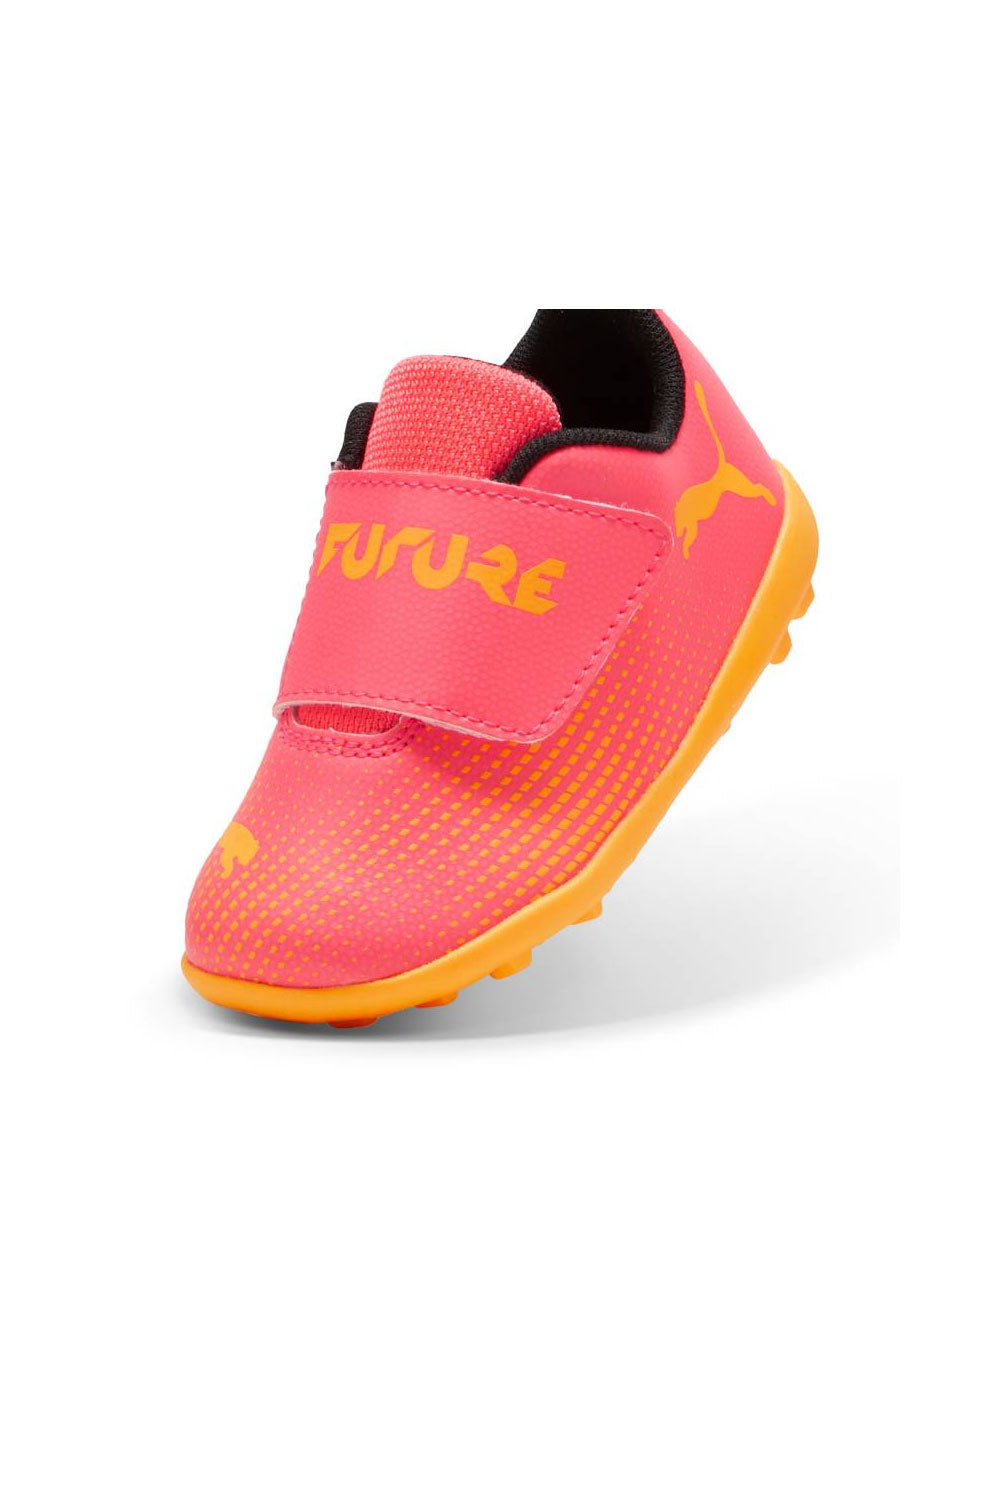 Puma נעלי קטרגל Future 7 בצבע כתום לתינוקות-Puma-23-נאקו